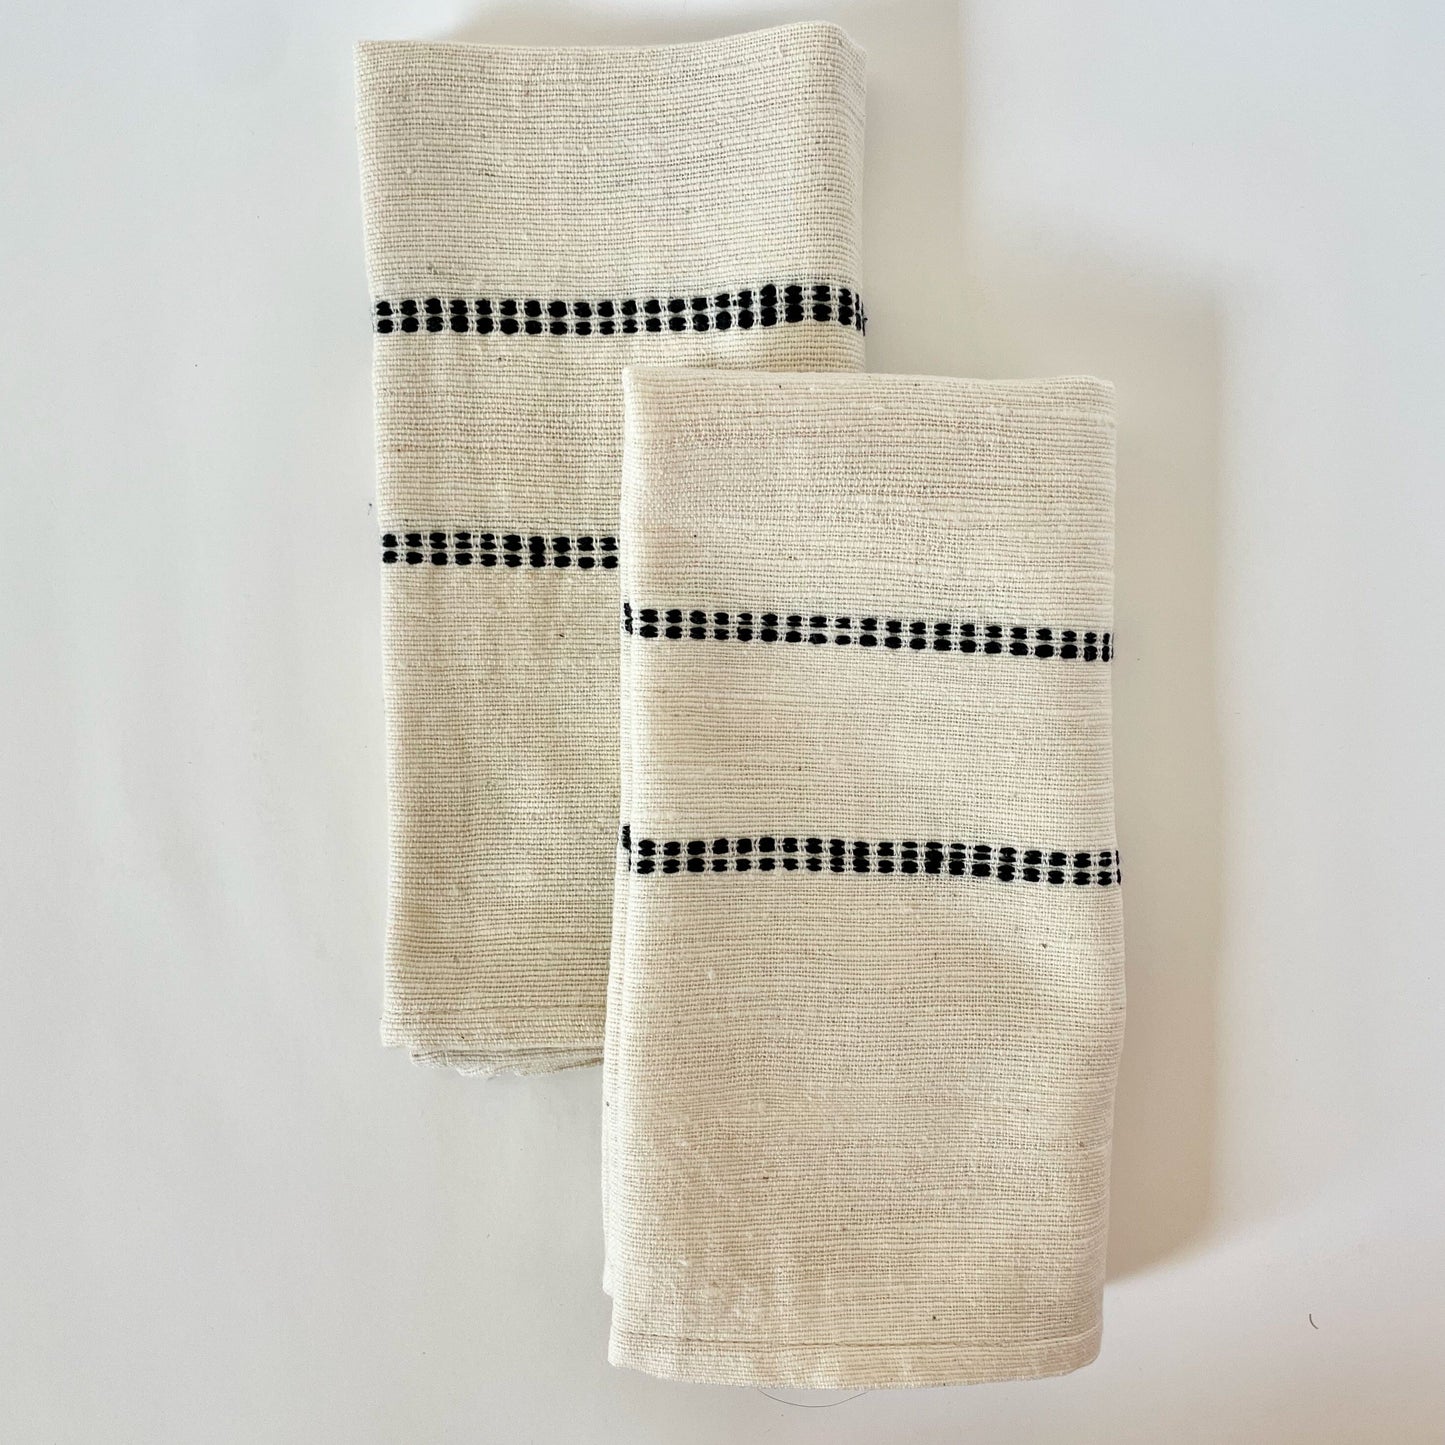 Chamo handwoven Ethiopian cotton napkins Napkins sabahar Black 